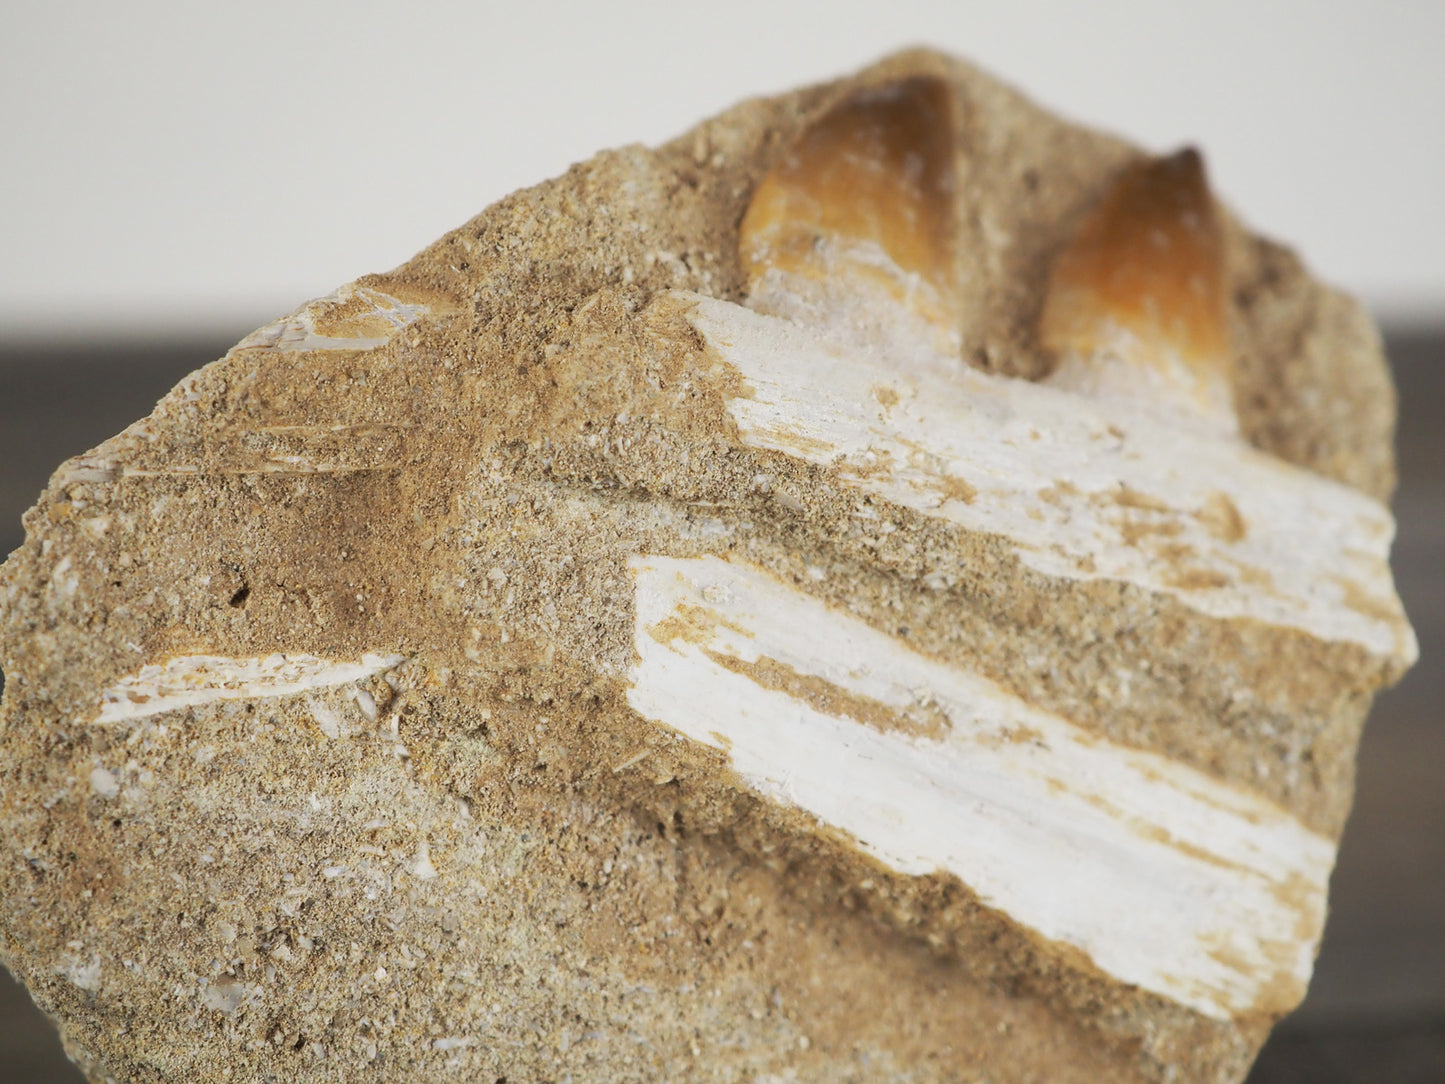 Multiple Mosasaur Teeth Fossil in Original Matrix with Bone Fragments